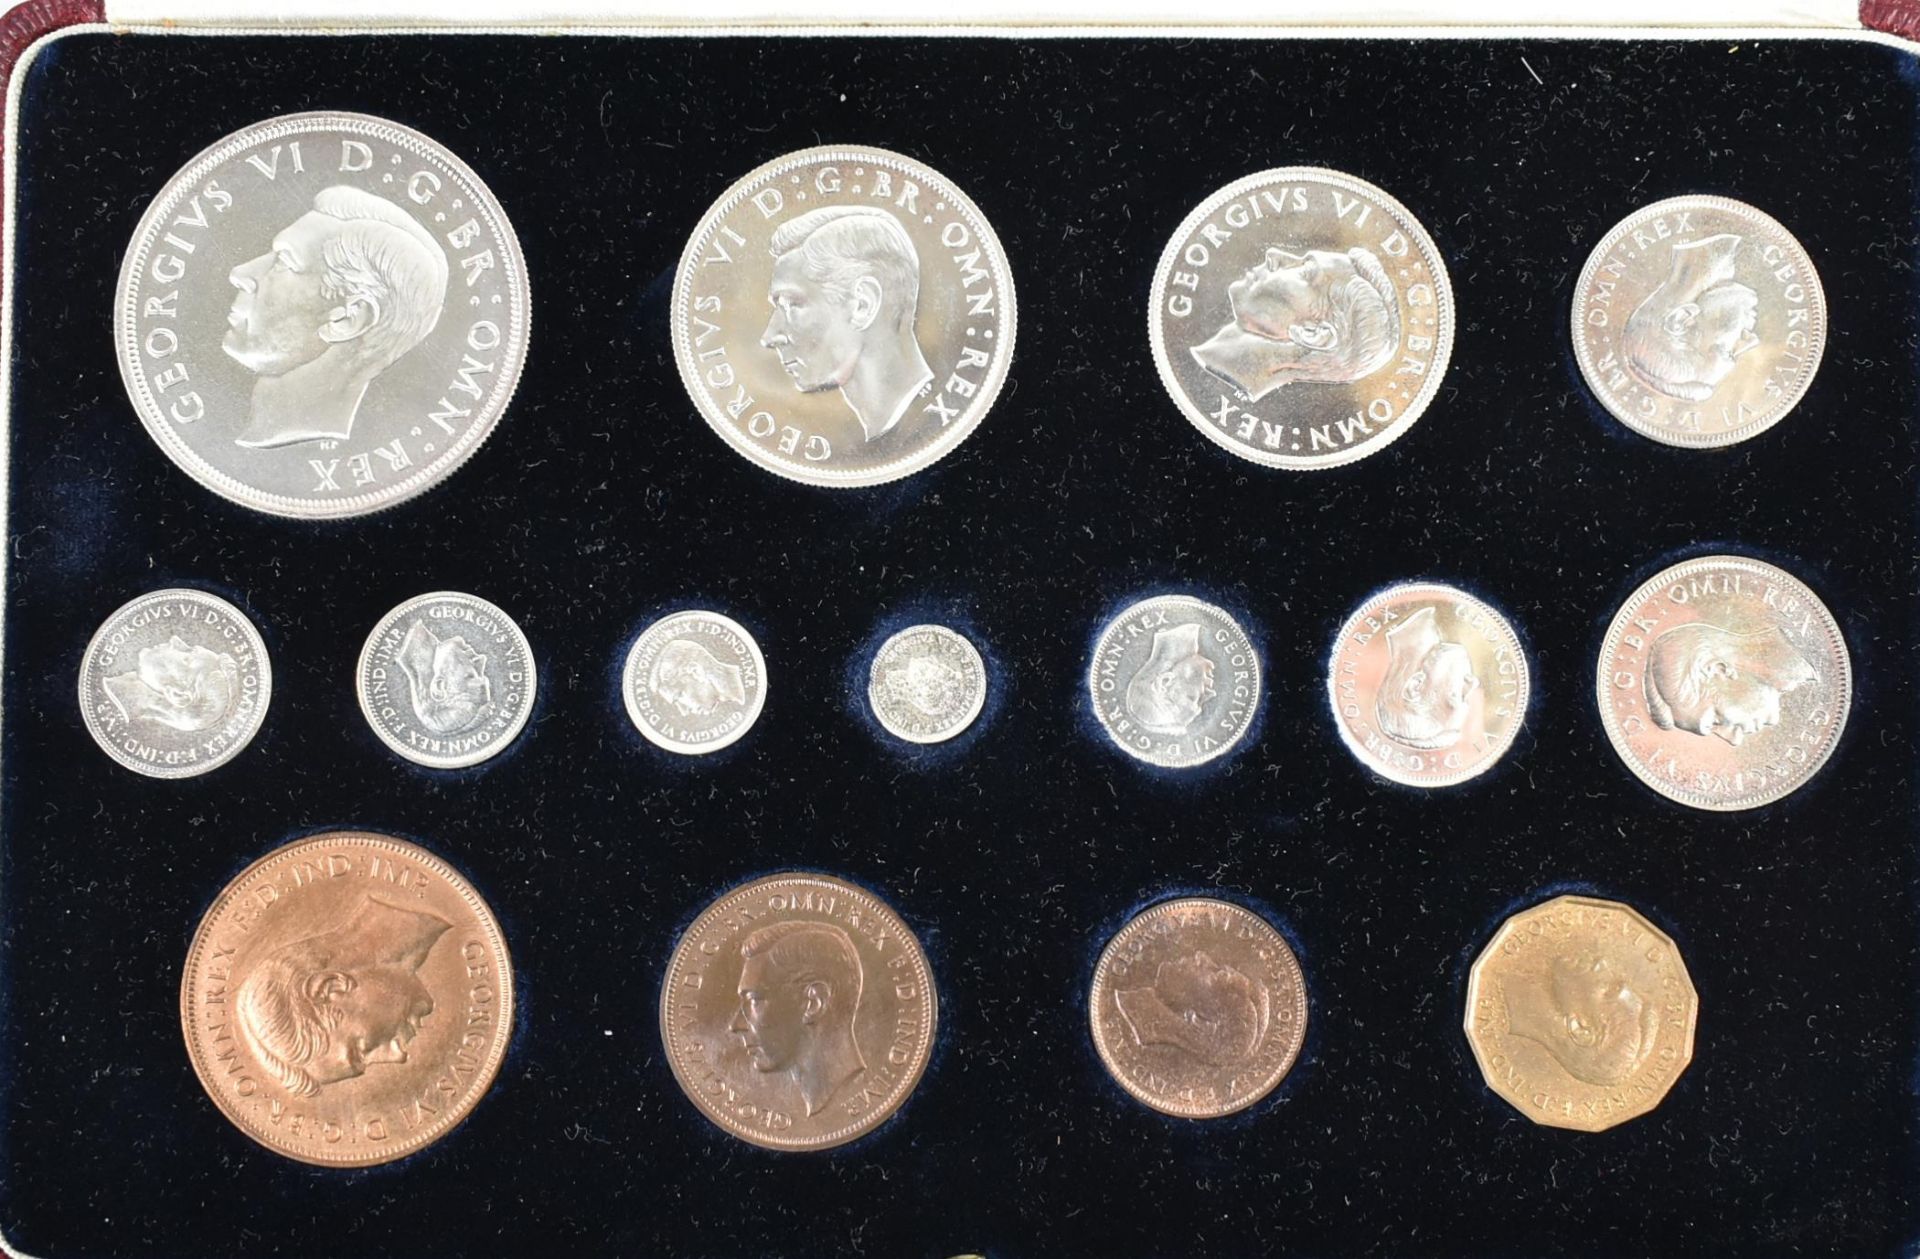 1937 - 15 PROOF SPECIMEN COINS SET IN LEATHER CASE - Image 3 of 4